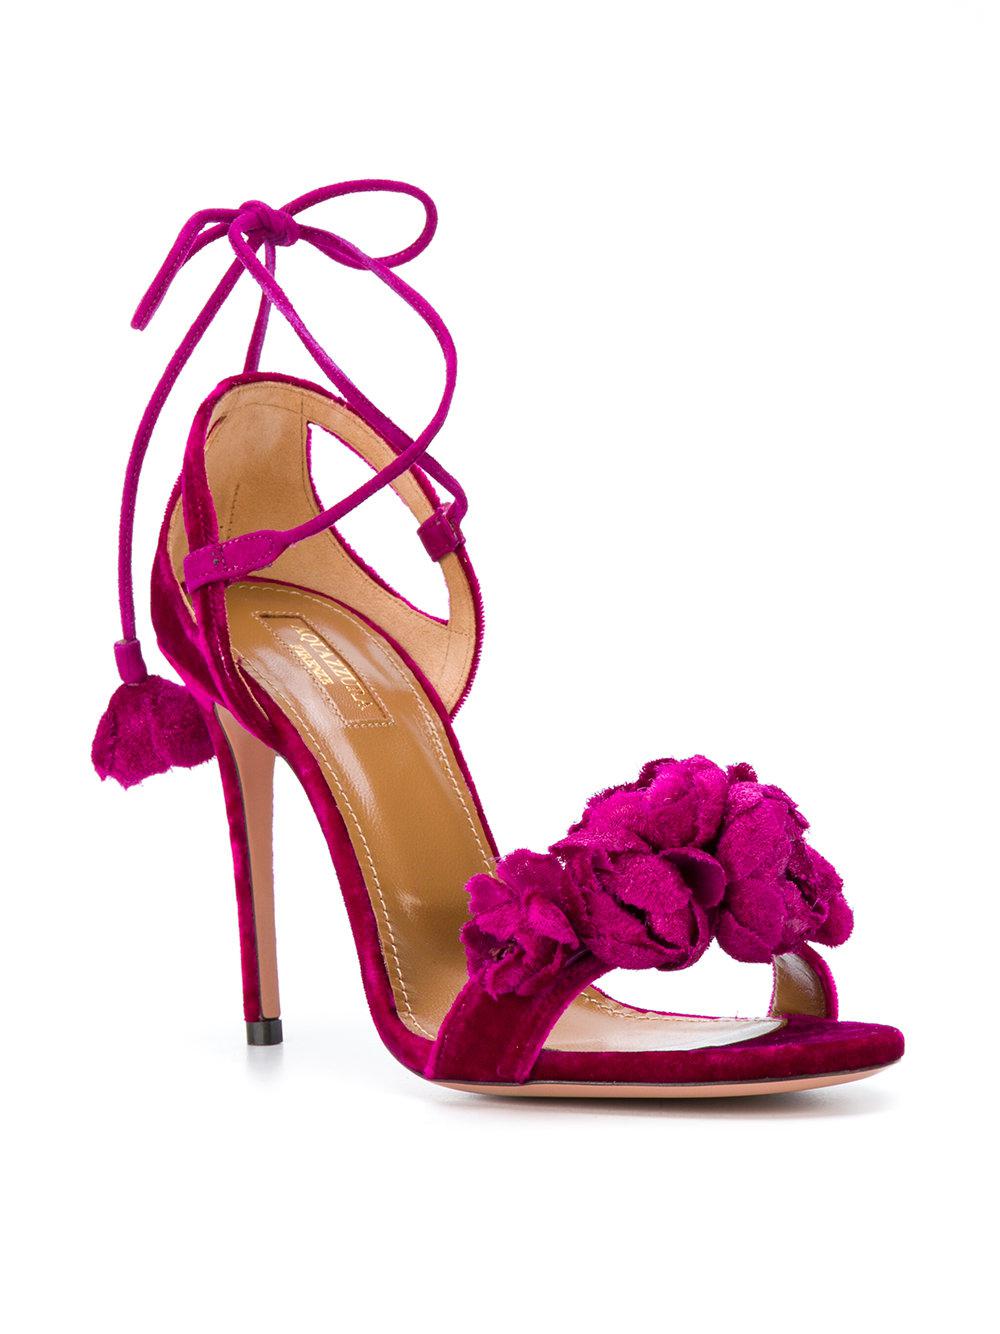 Aquazzura Velvet Wild Flower Sandals in Pink - Lyst